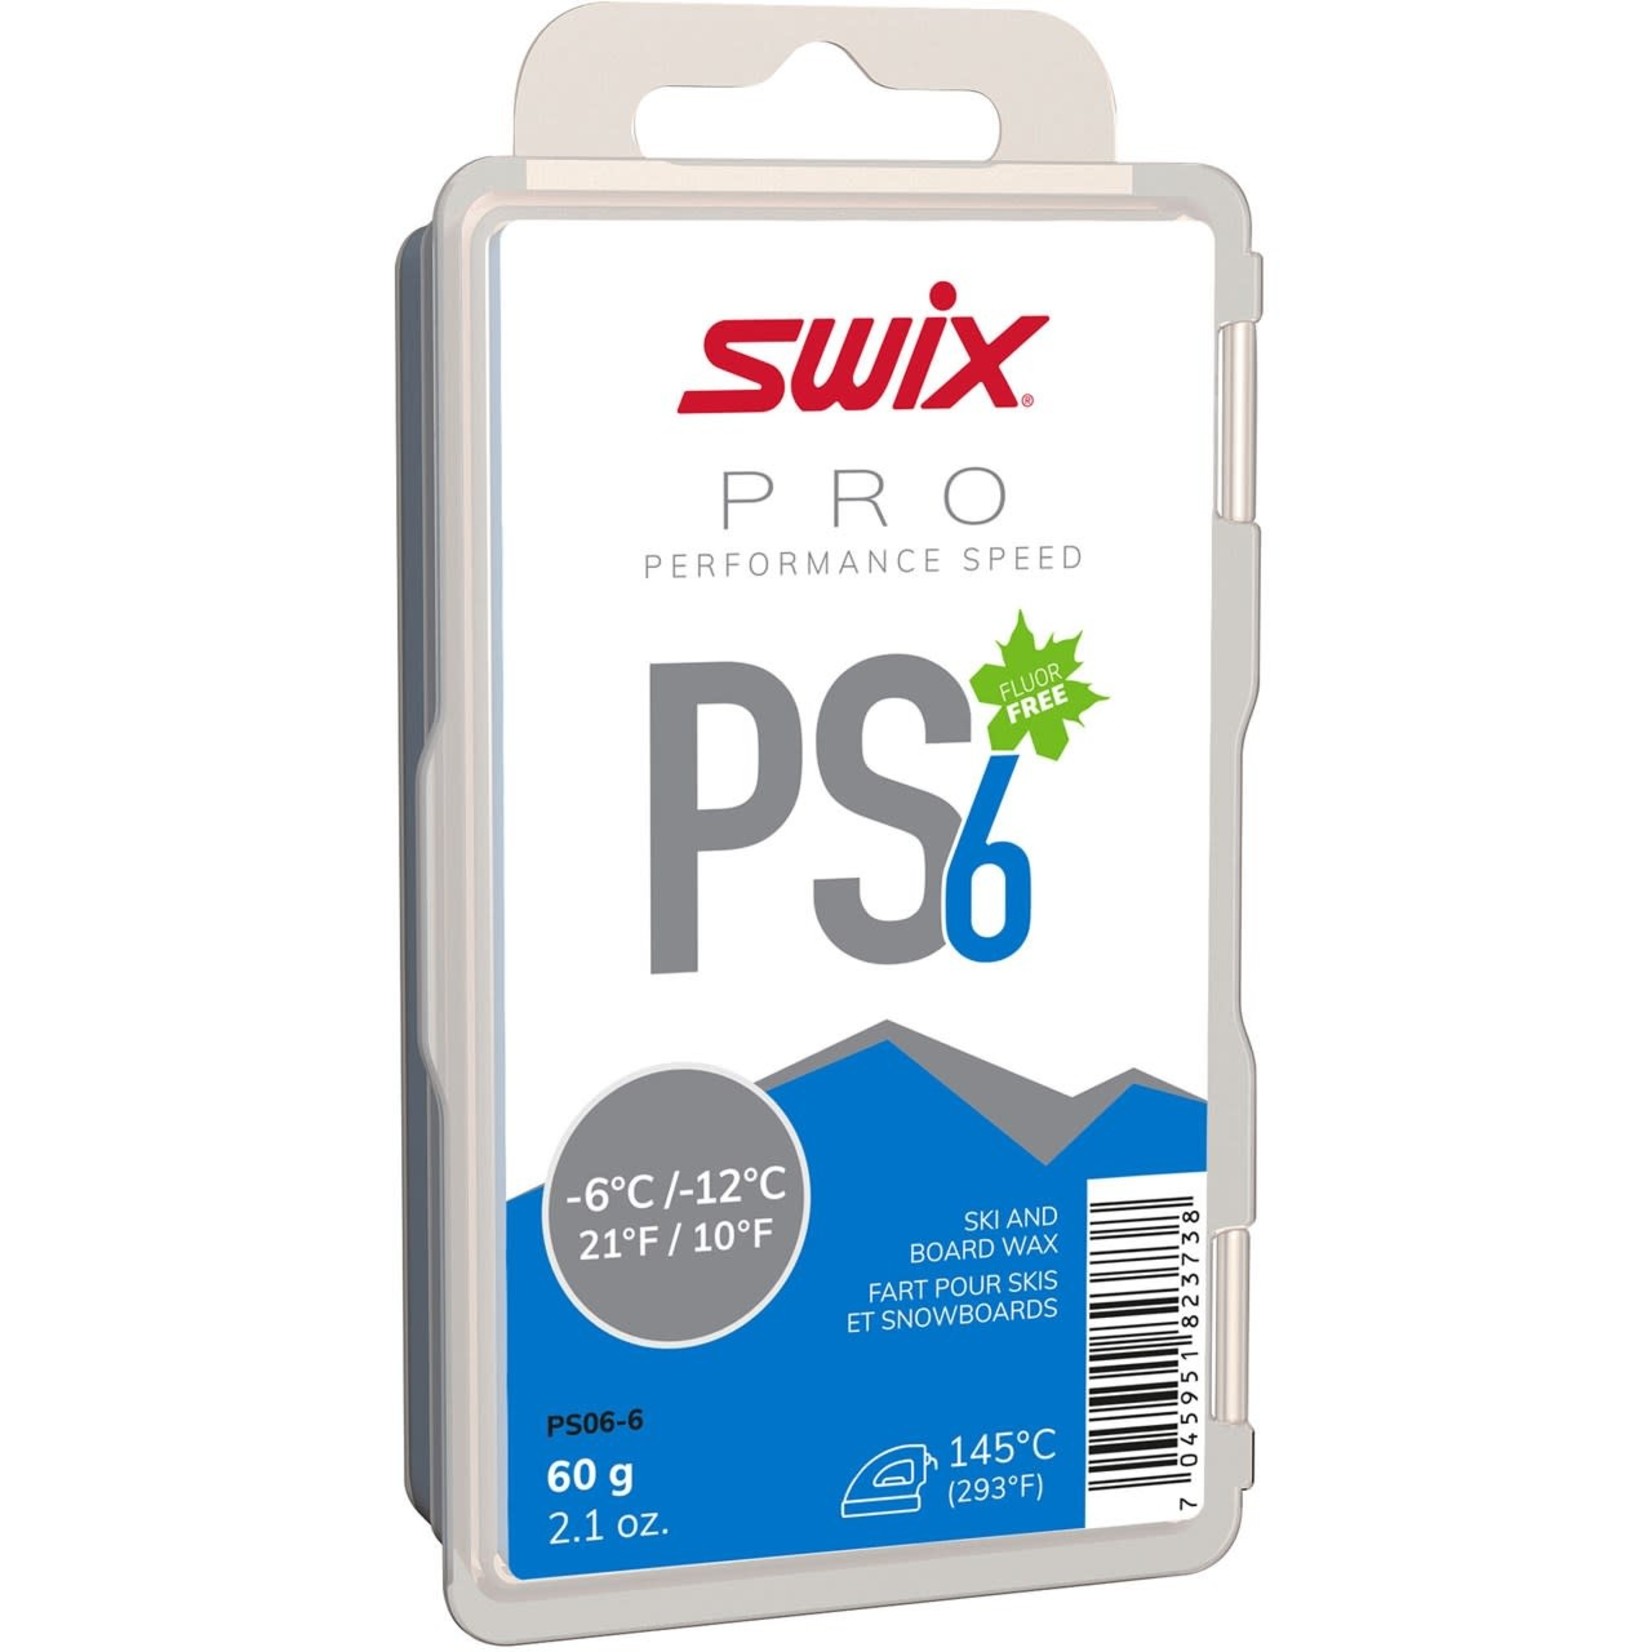 Swix Swix Pro PS